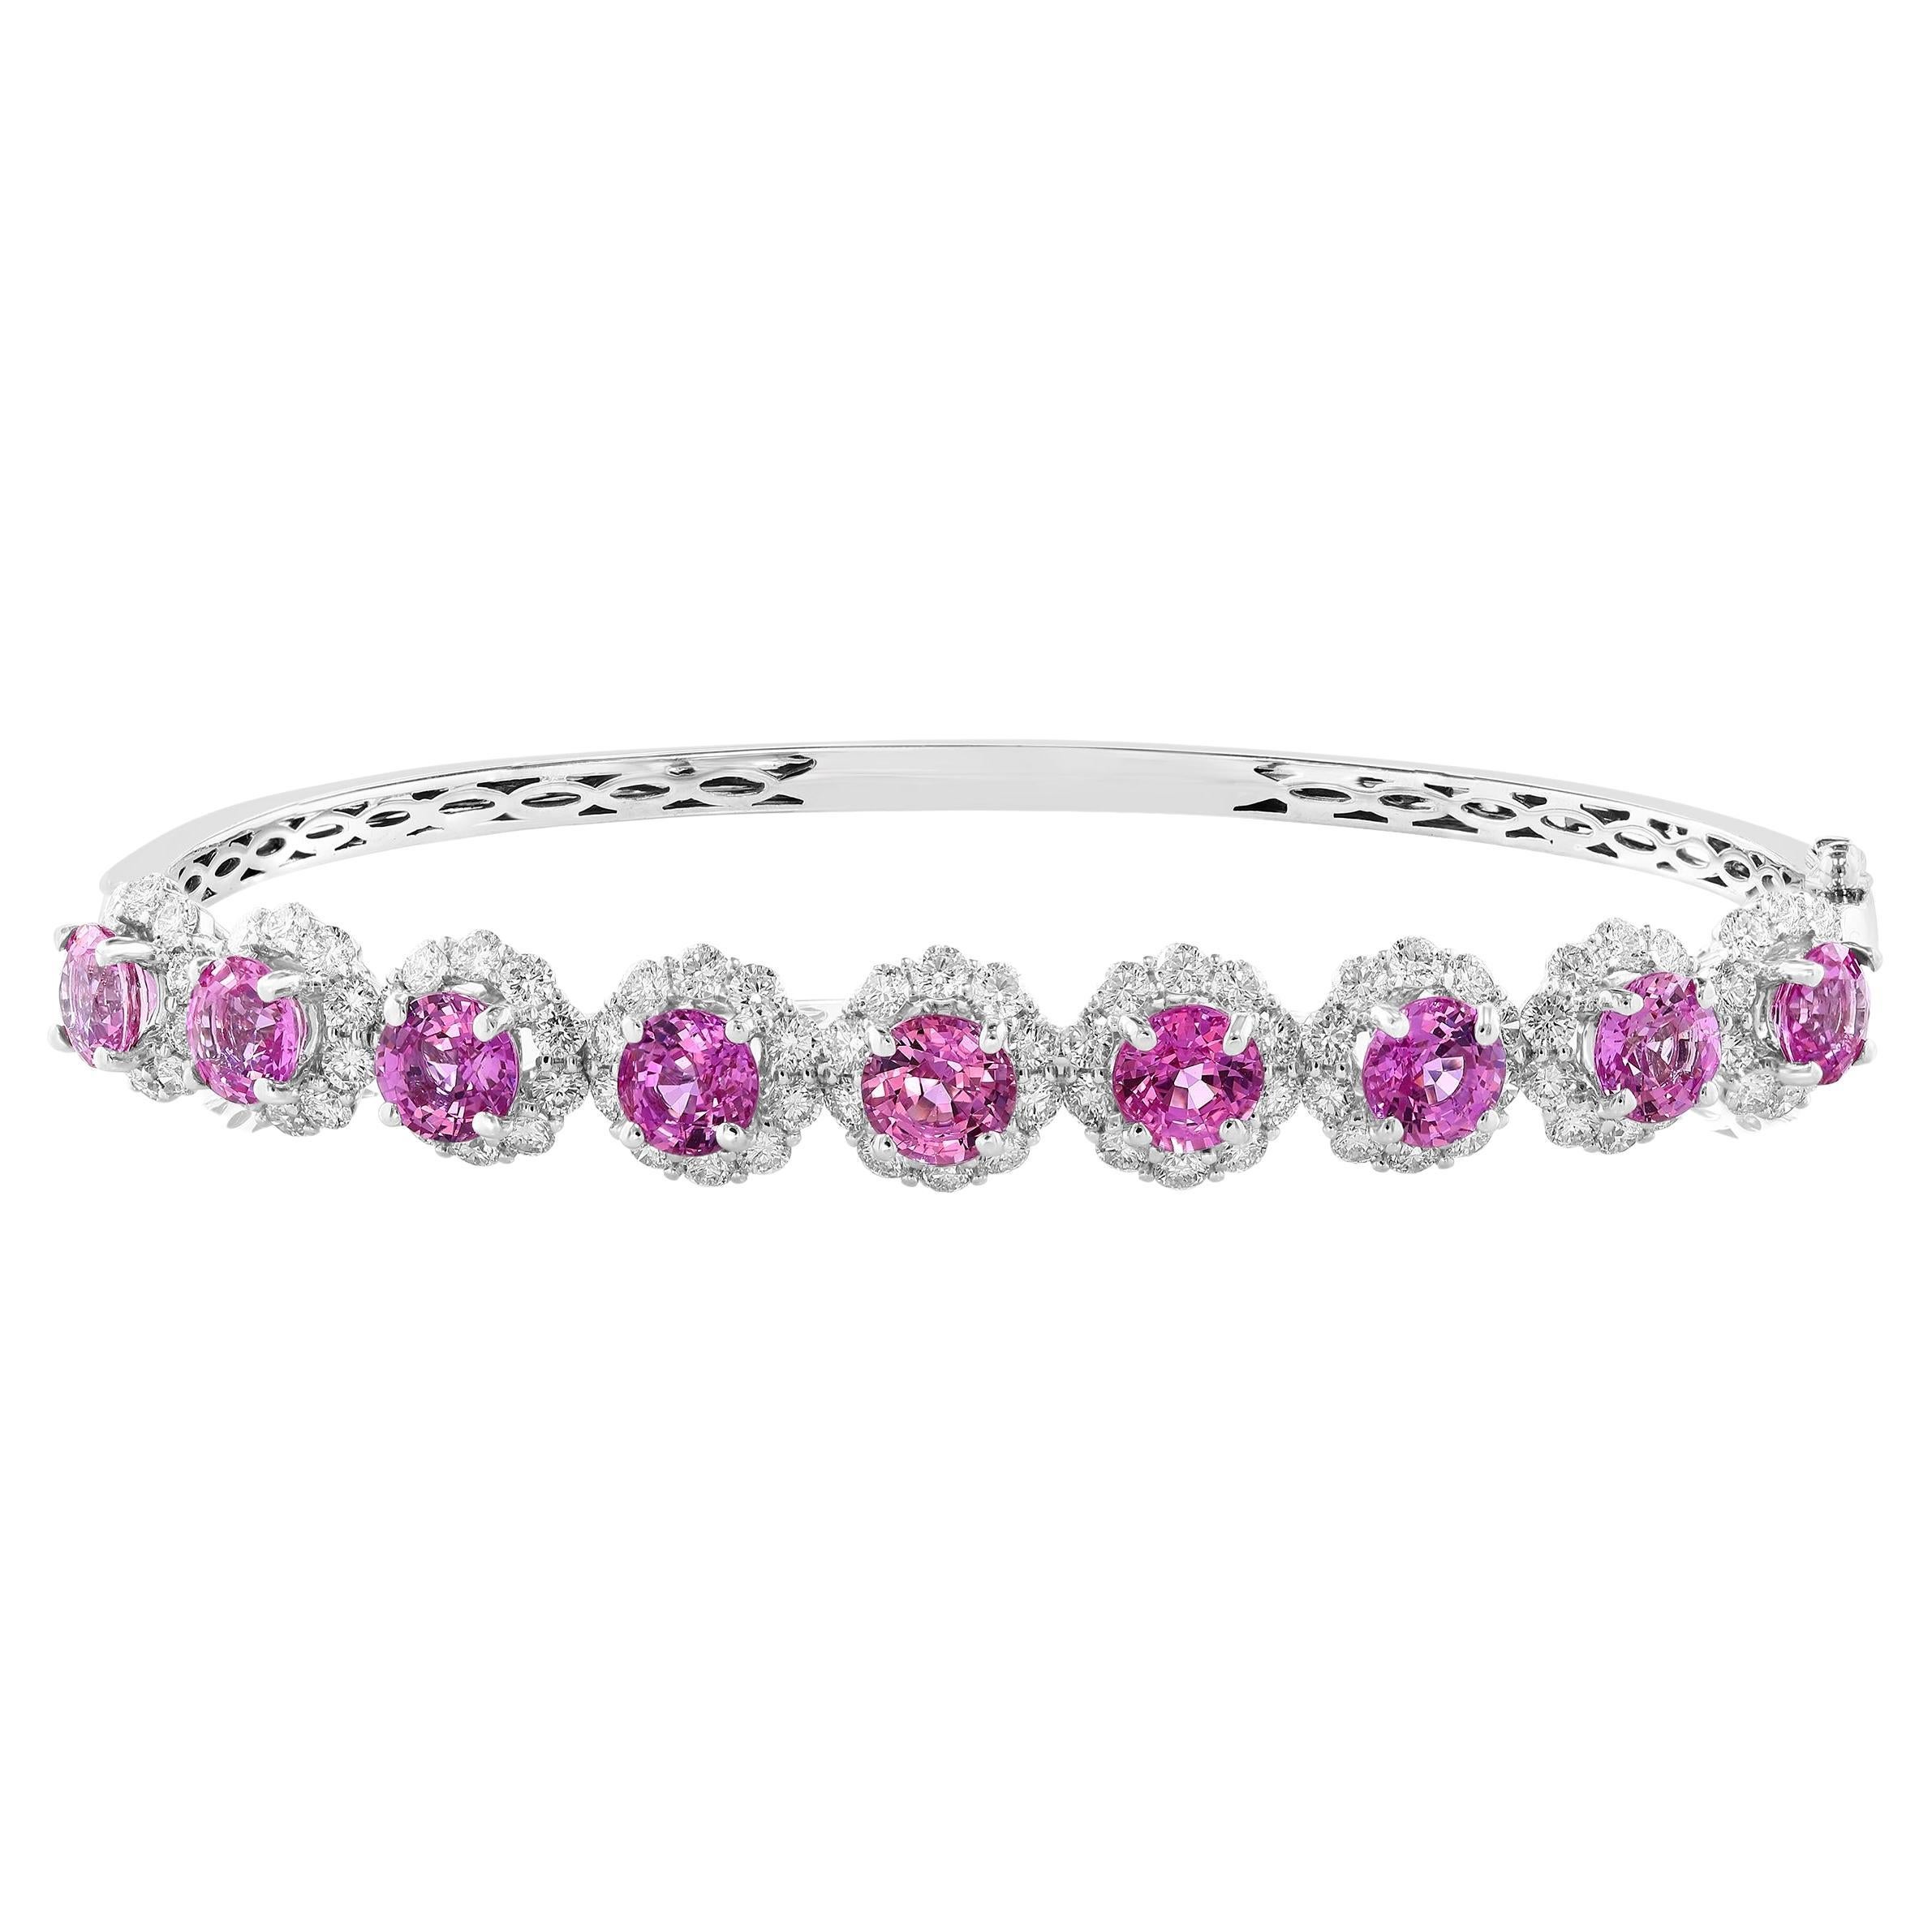 5.82 Carat Brilliant Cut Pink Sapphire Diamond Bangle Bracelet in 18k White Gold For Sale